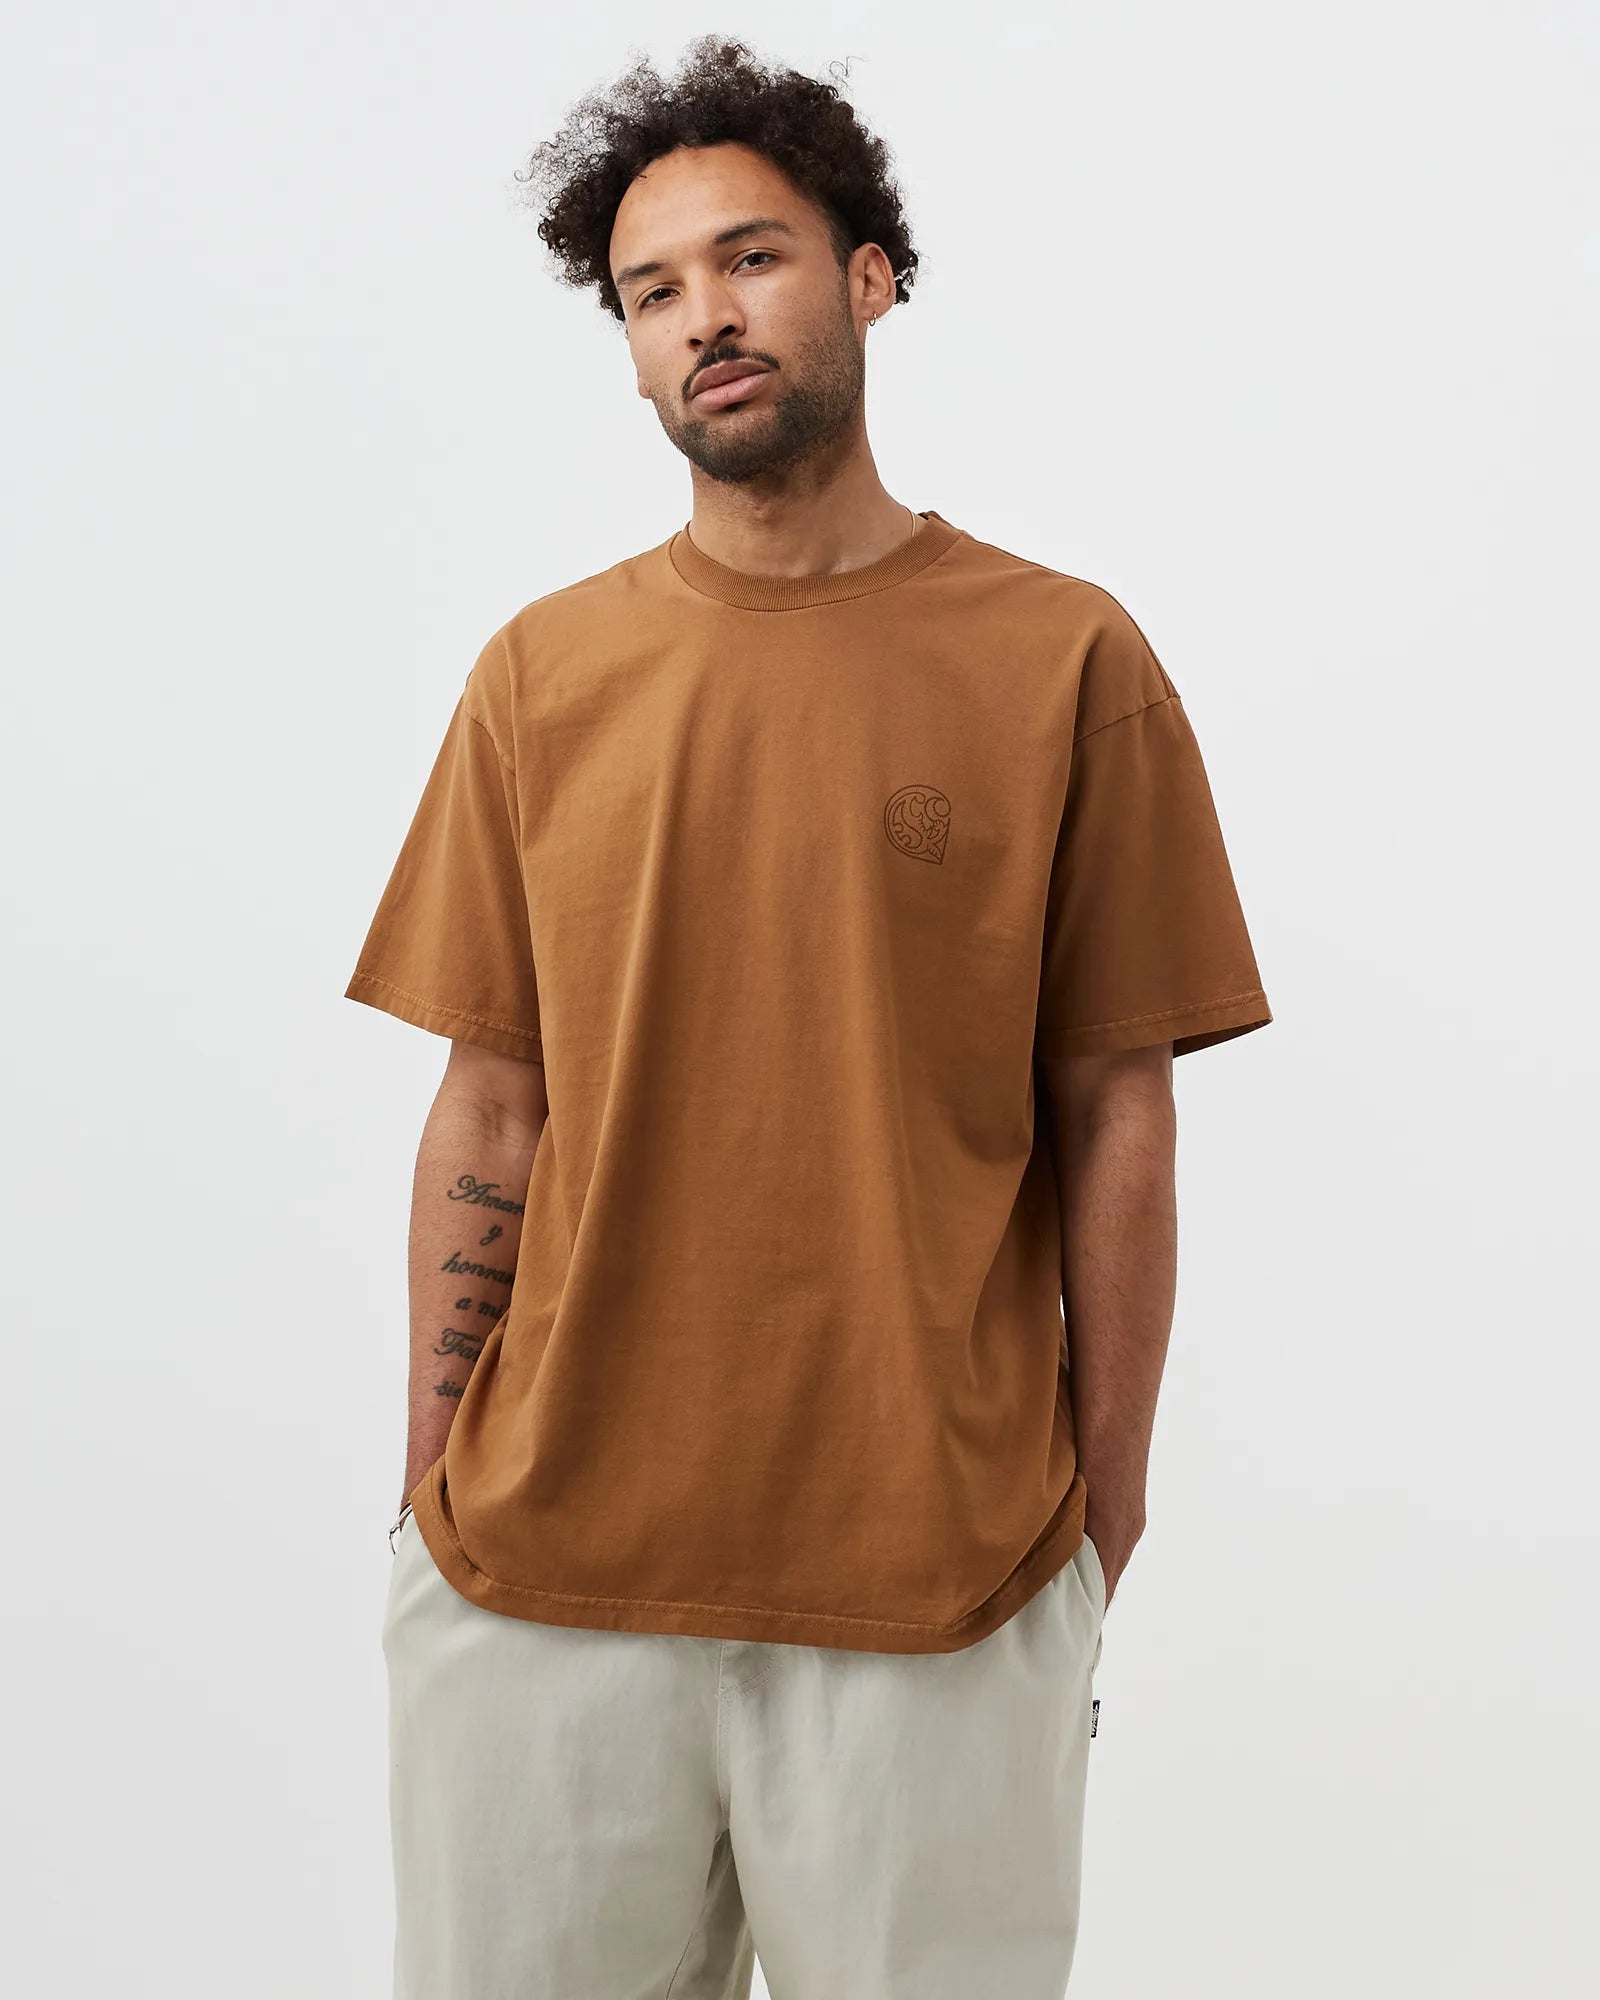 S/S Verse Patch T-Shirt (Hamilton Brown - Garment dyed)